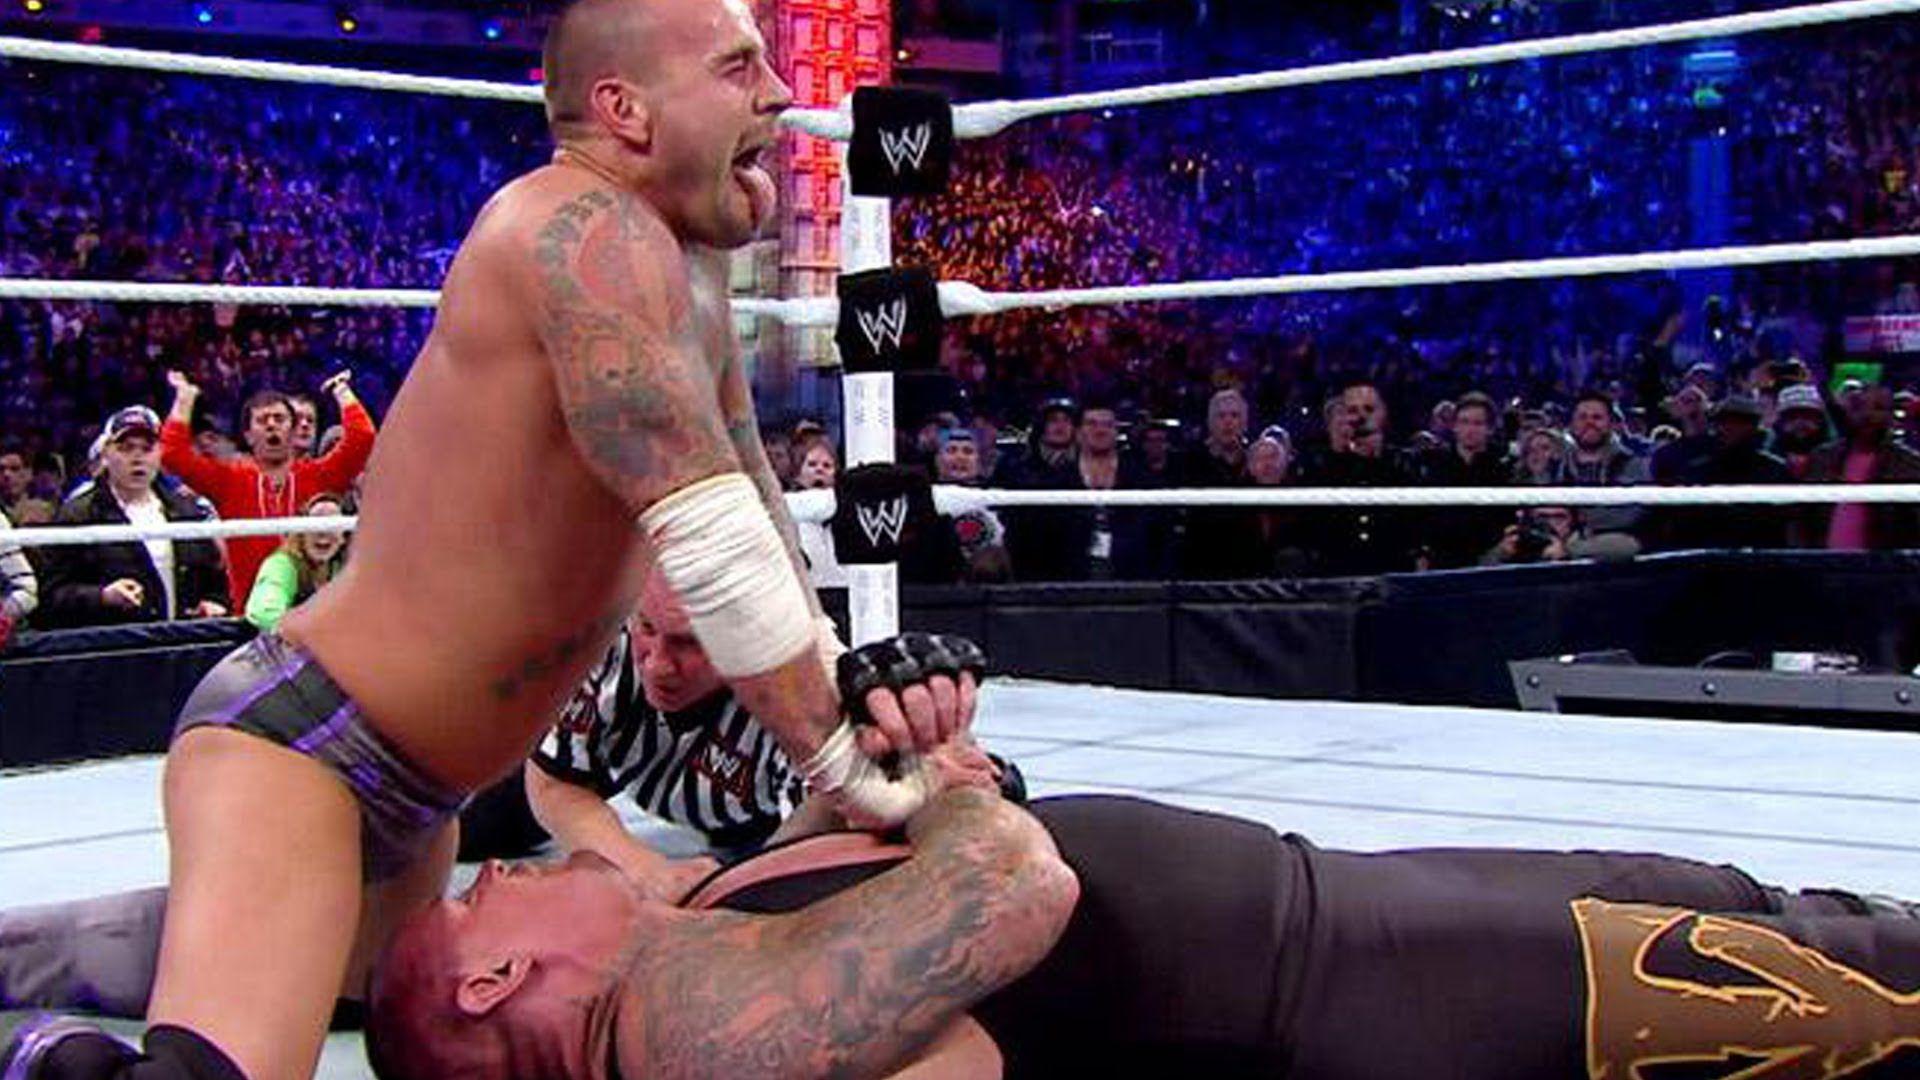 WWE Wrestlemania 29 Punk vs. The Undertaker (The Streak) Full